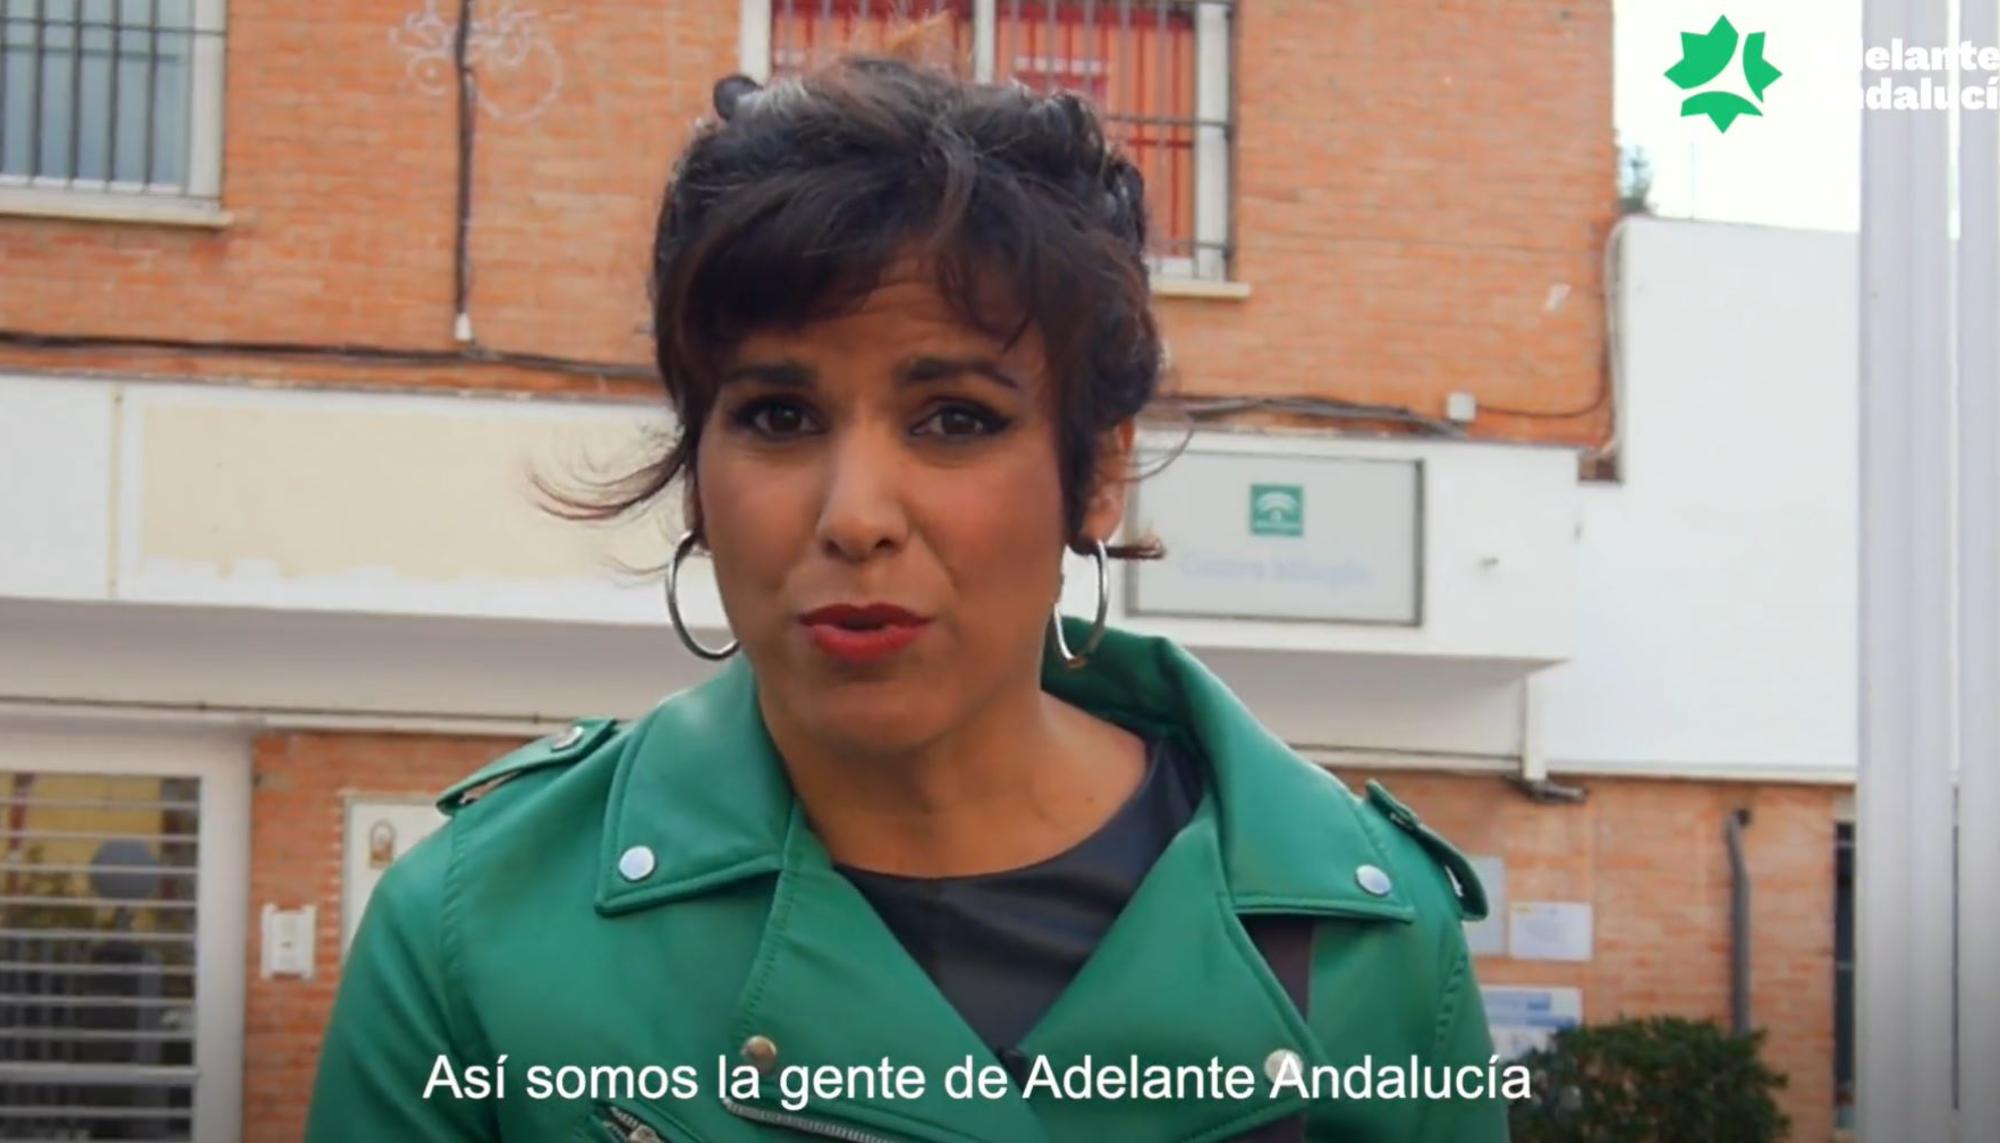 Teresa Rodríguez Vídeo despedida